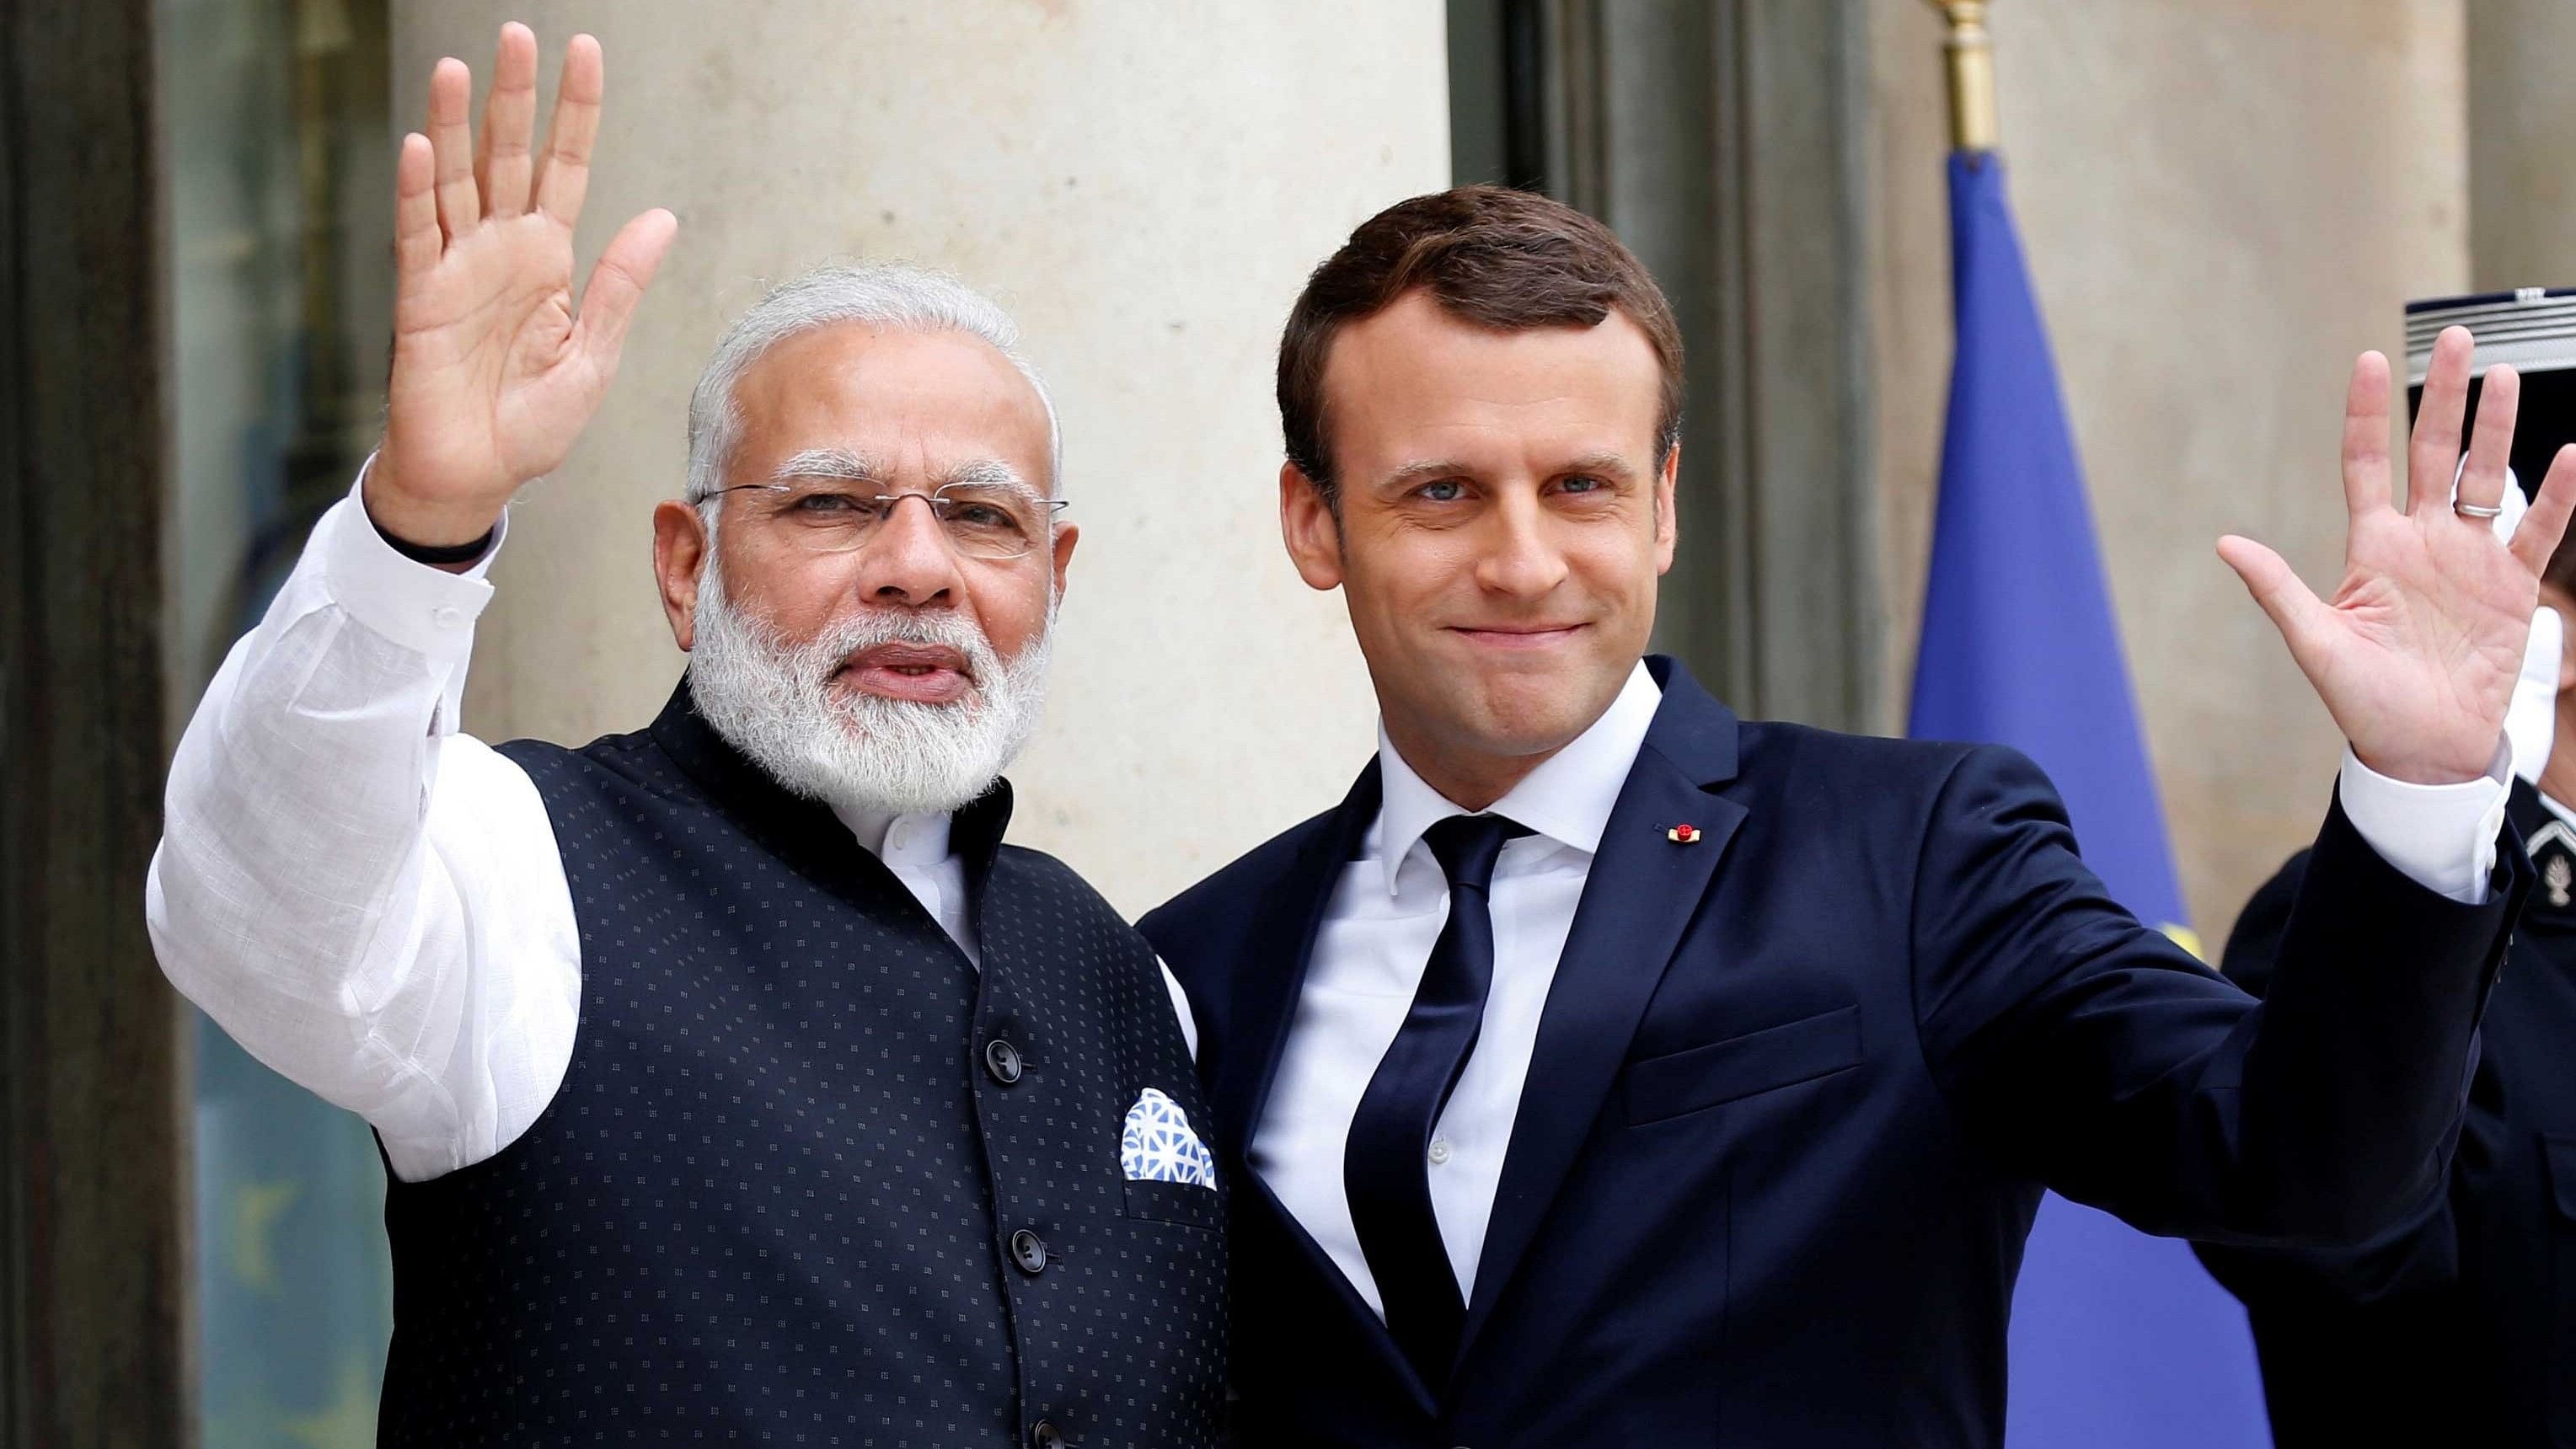 <div class="paragraphs"><p>Prime Minster Narendra Modi meets French President Emmanuel Macron.</p></div>